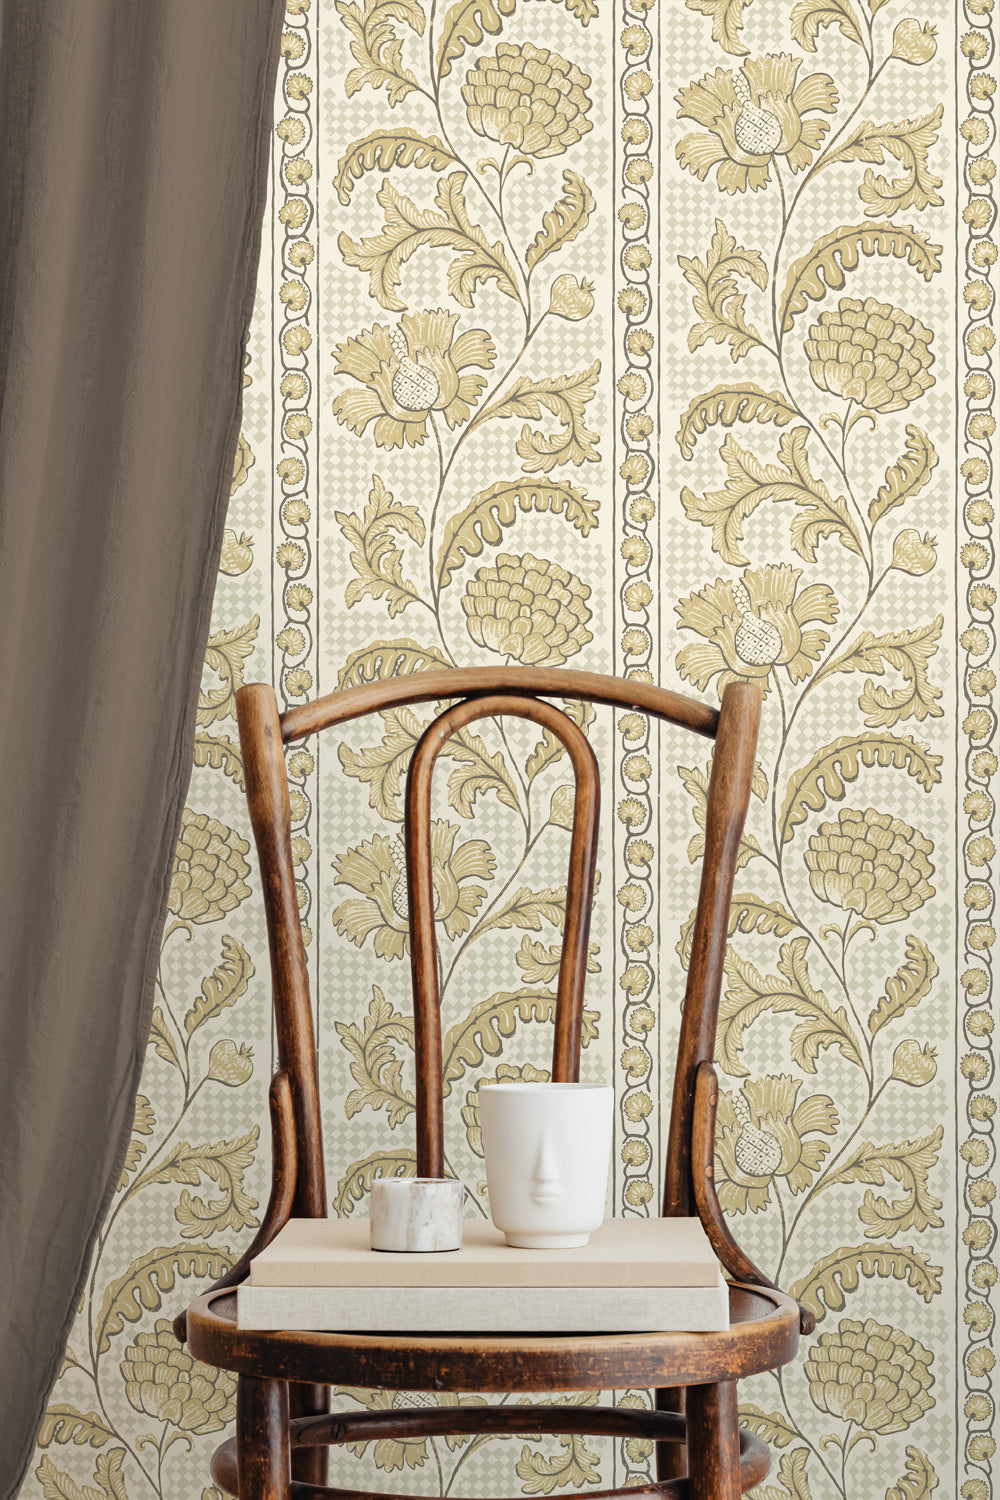 Josephine-Munsey-Floral-Check-Wallpaper-Lemon-and-Salt-Ridge-Floral-trailing-stripes-checkered-background-traditional-print-illustrated-pattern-British-Designer